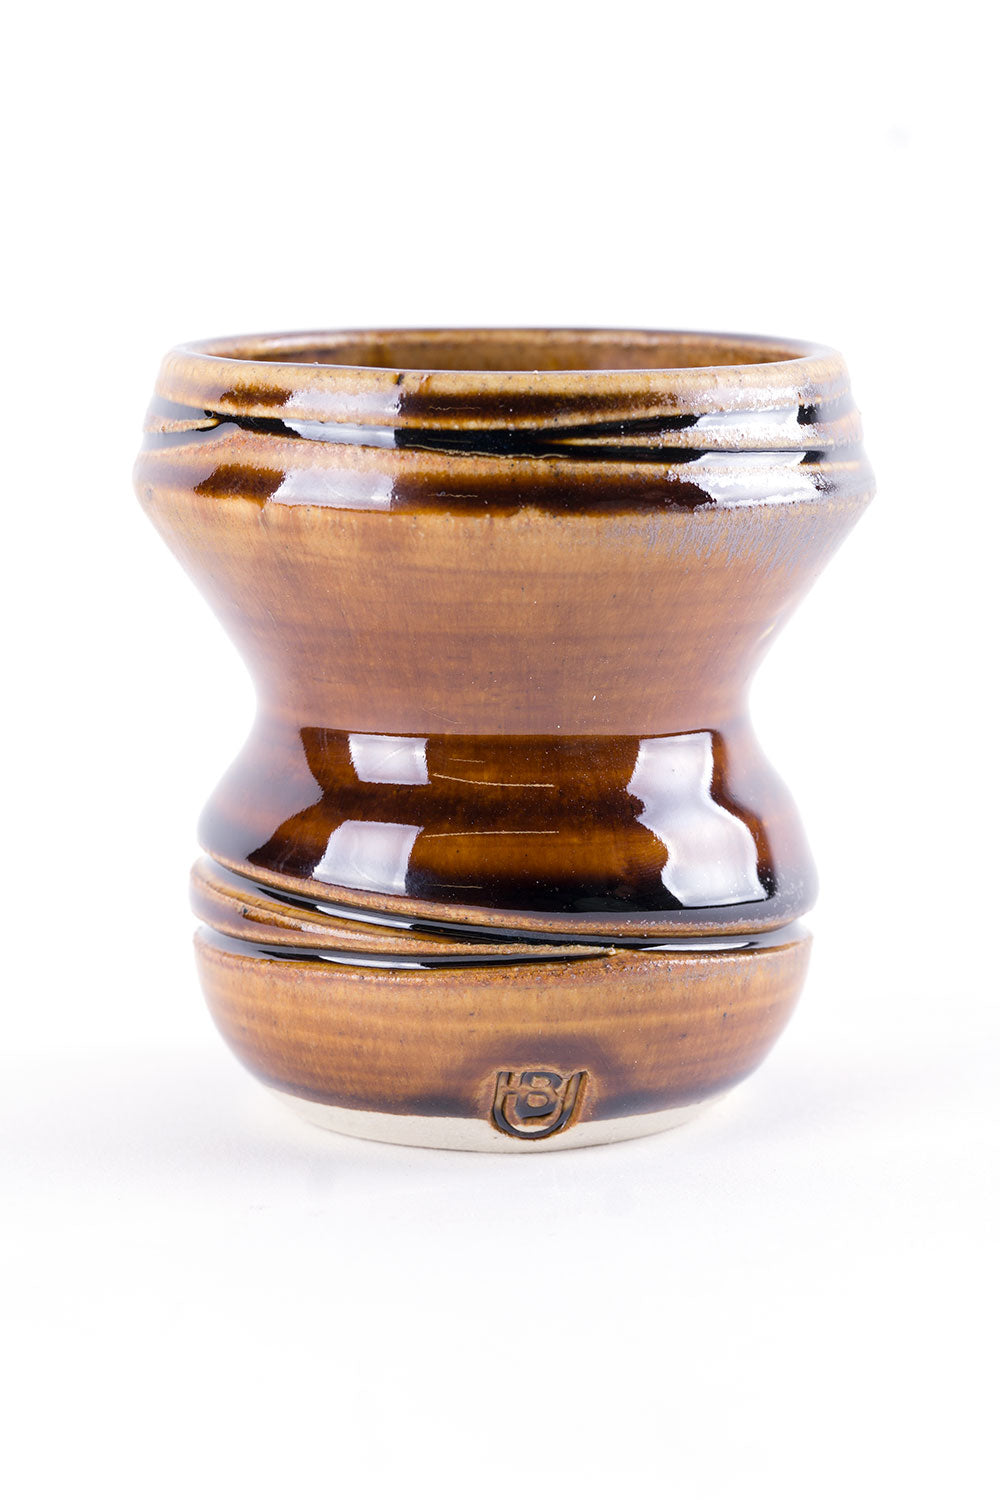 UrbBowls Globe Hookah Bowls - Shisha Flavor Bowl